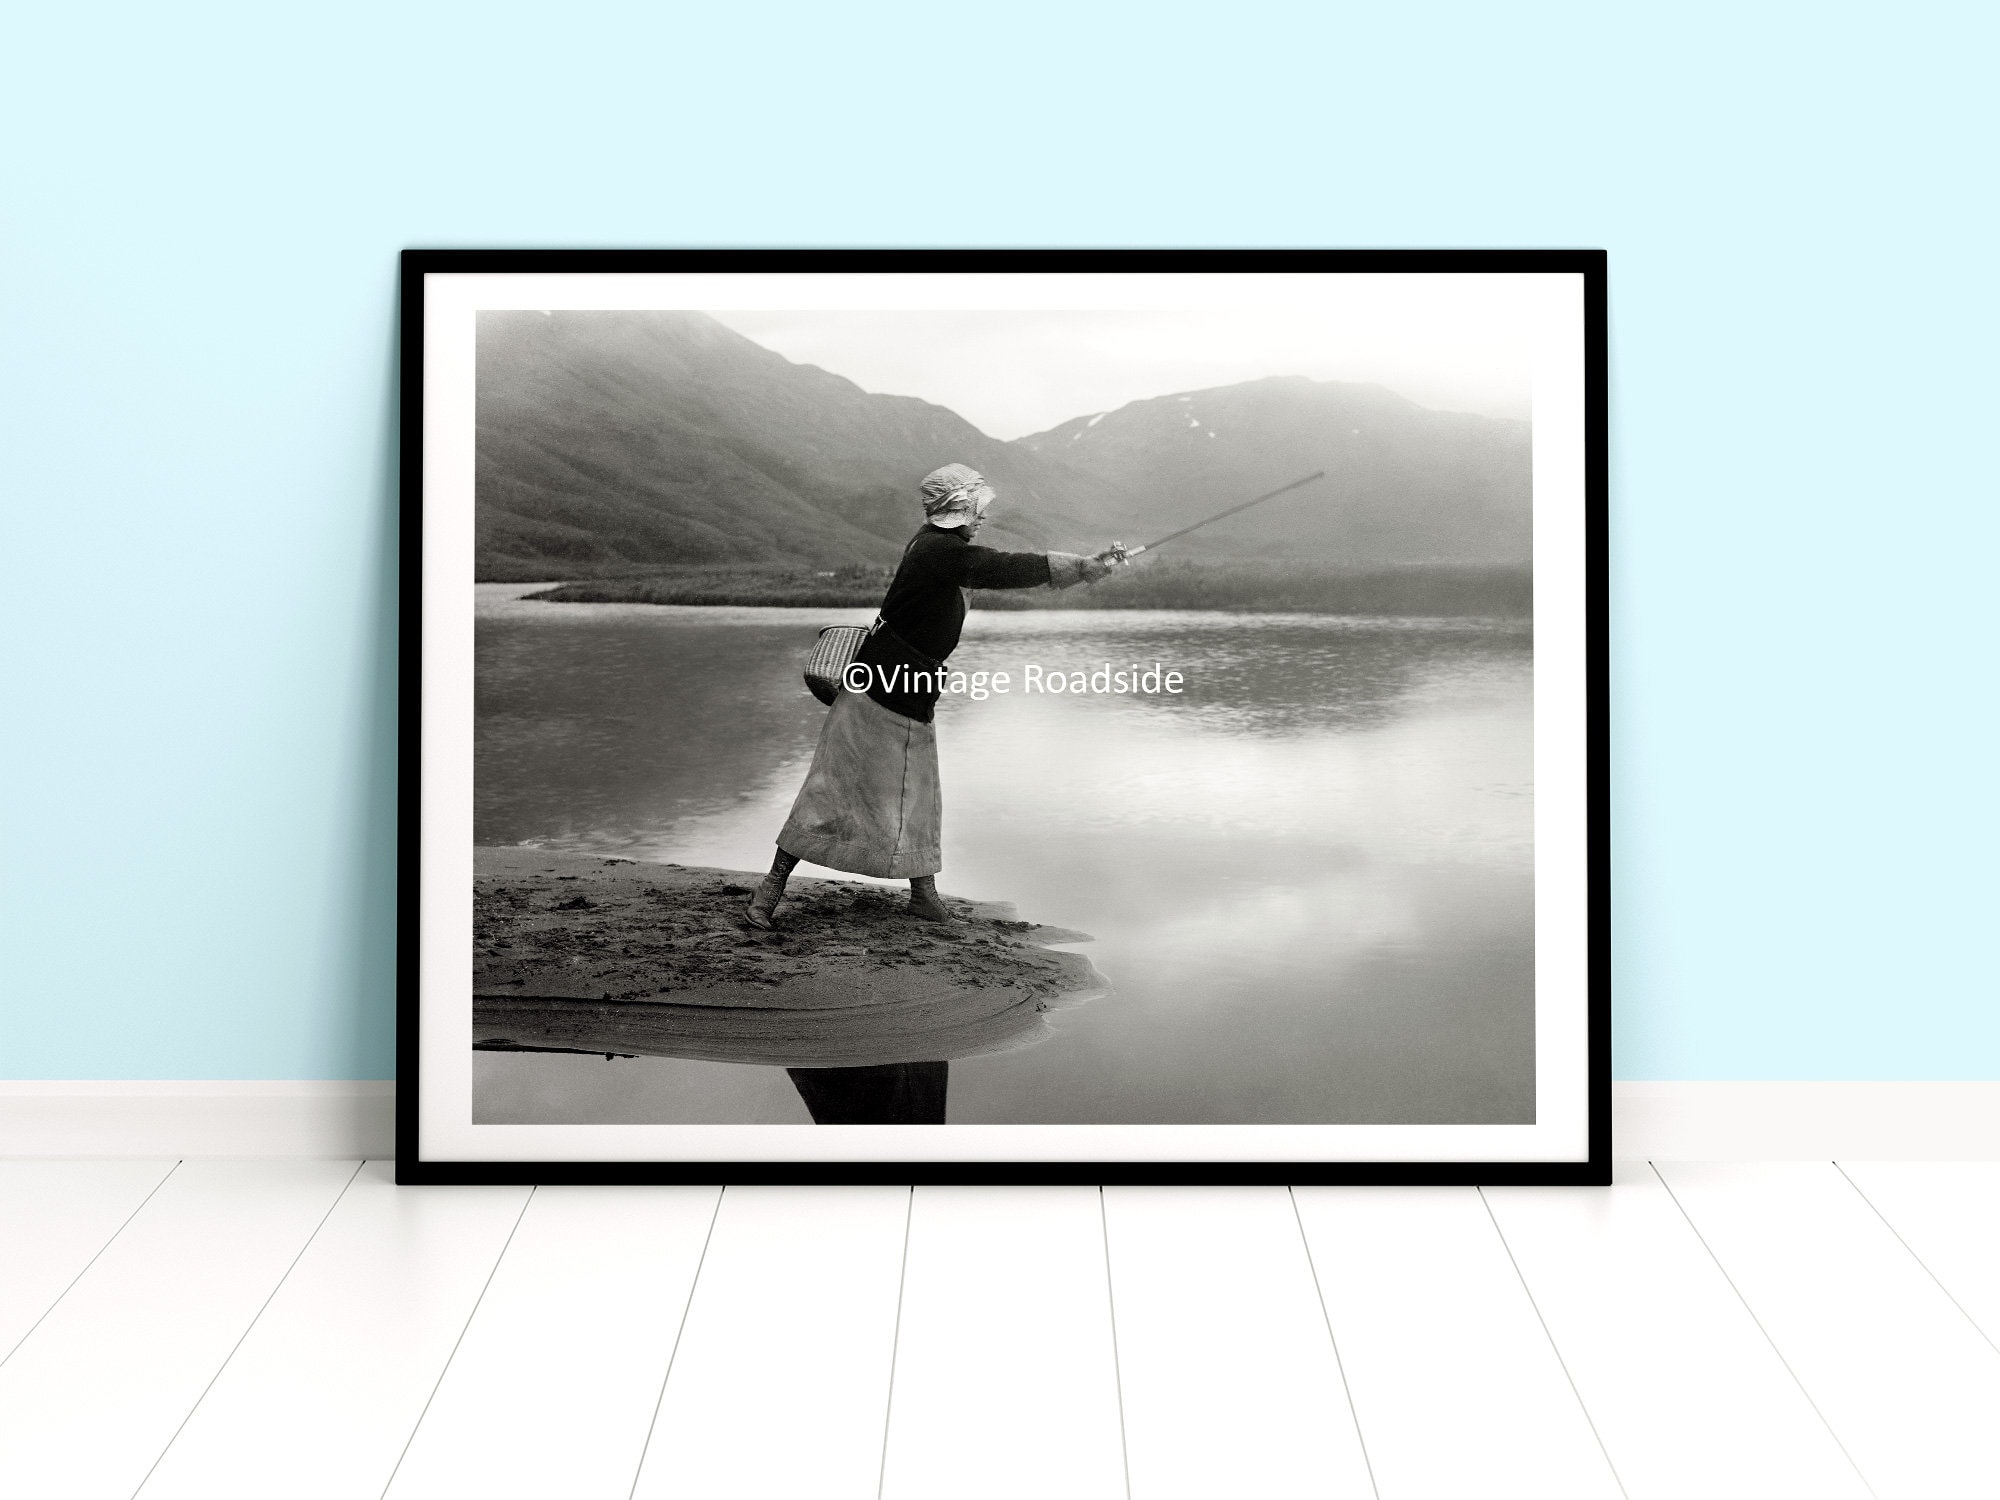 Vintage Digital Image Download Printable Wall Art Boy Fishing With Dog -   Canada